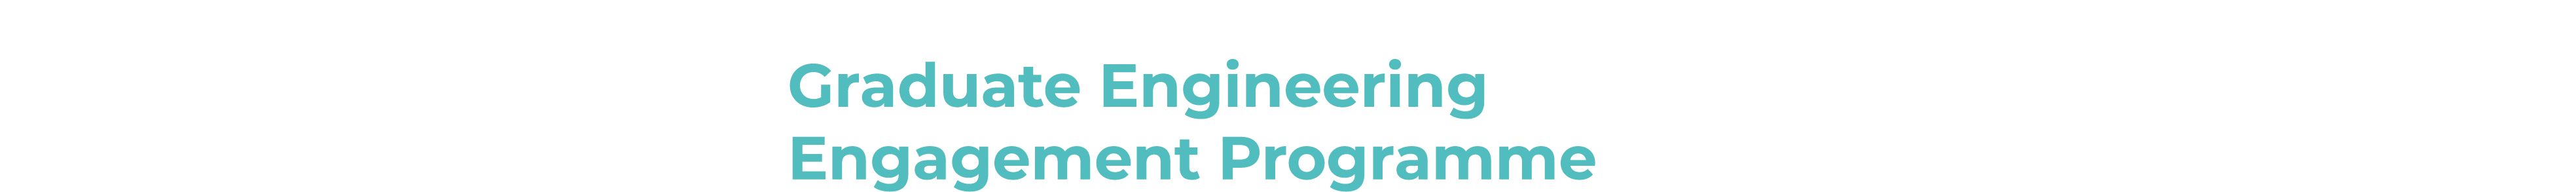 Graduate Engineering Engagement Programme - Royal Academy of Engineering